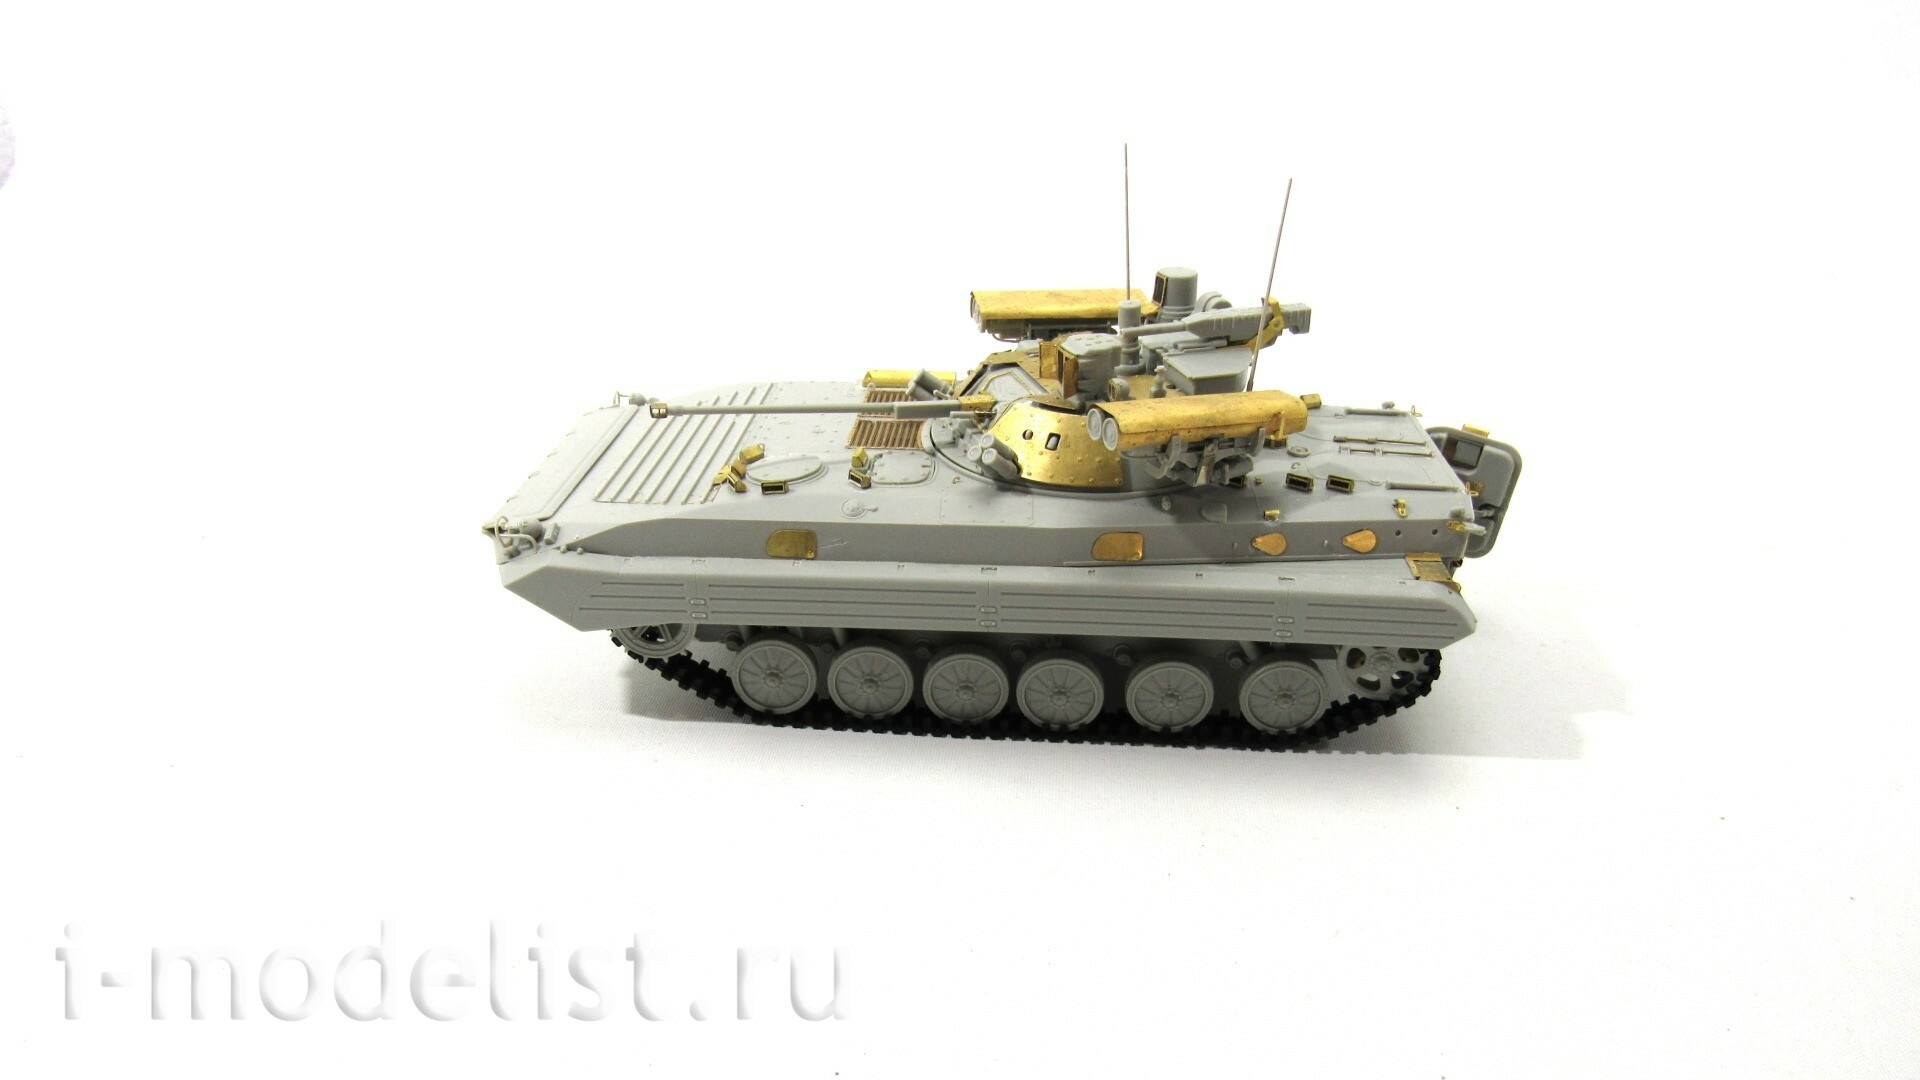 035504 Microdesign 1/35 BMP-2 